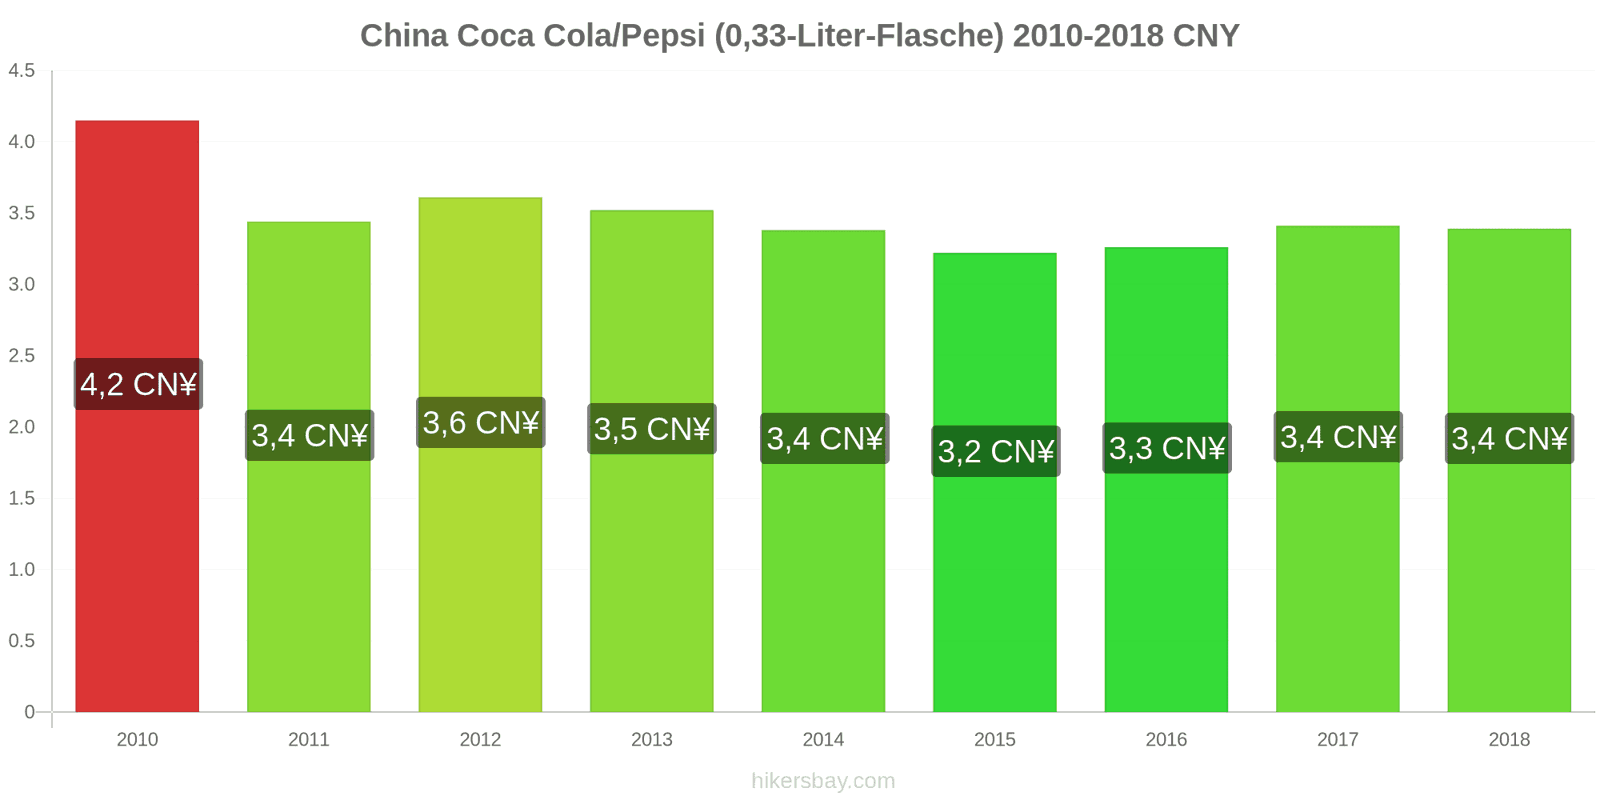 China Preisänderungen Coke/Pepsi (0.33-Liter-Flasche) hikersbay.com